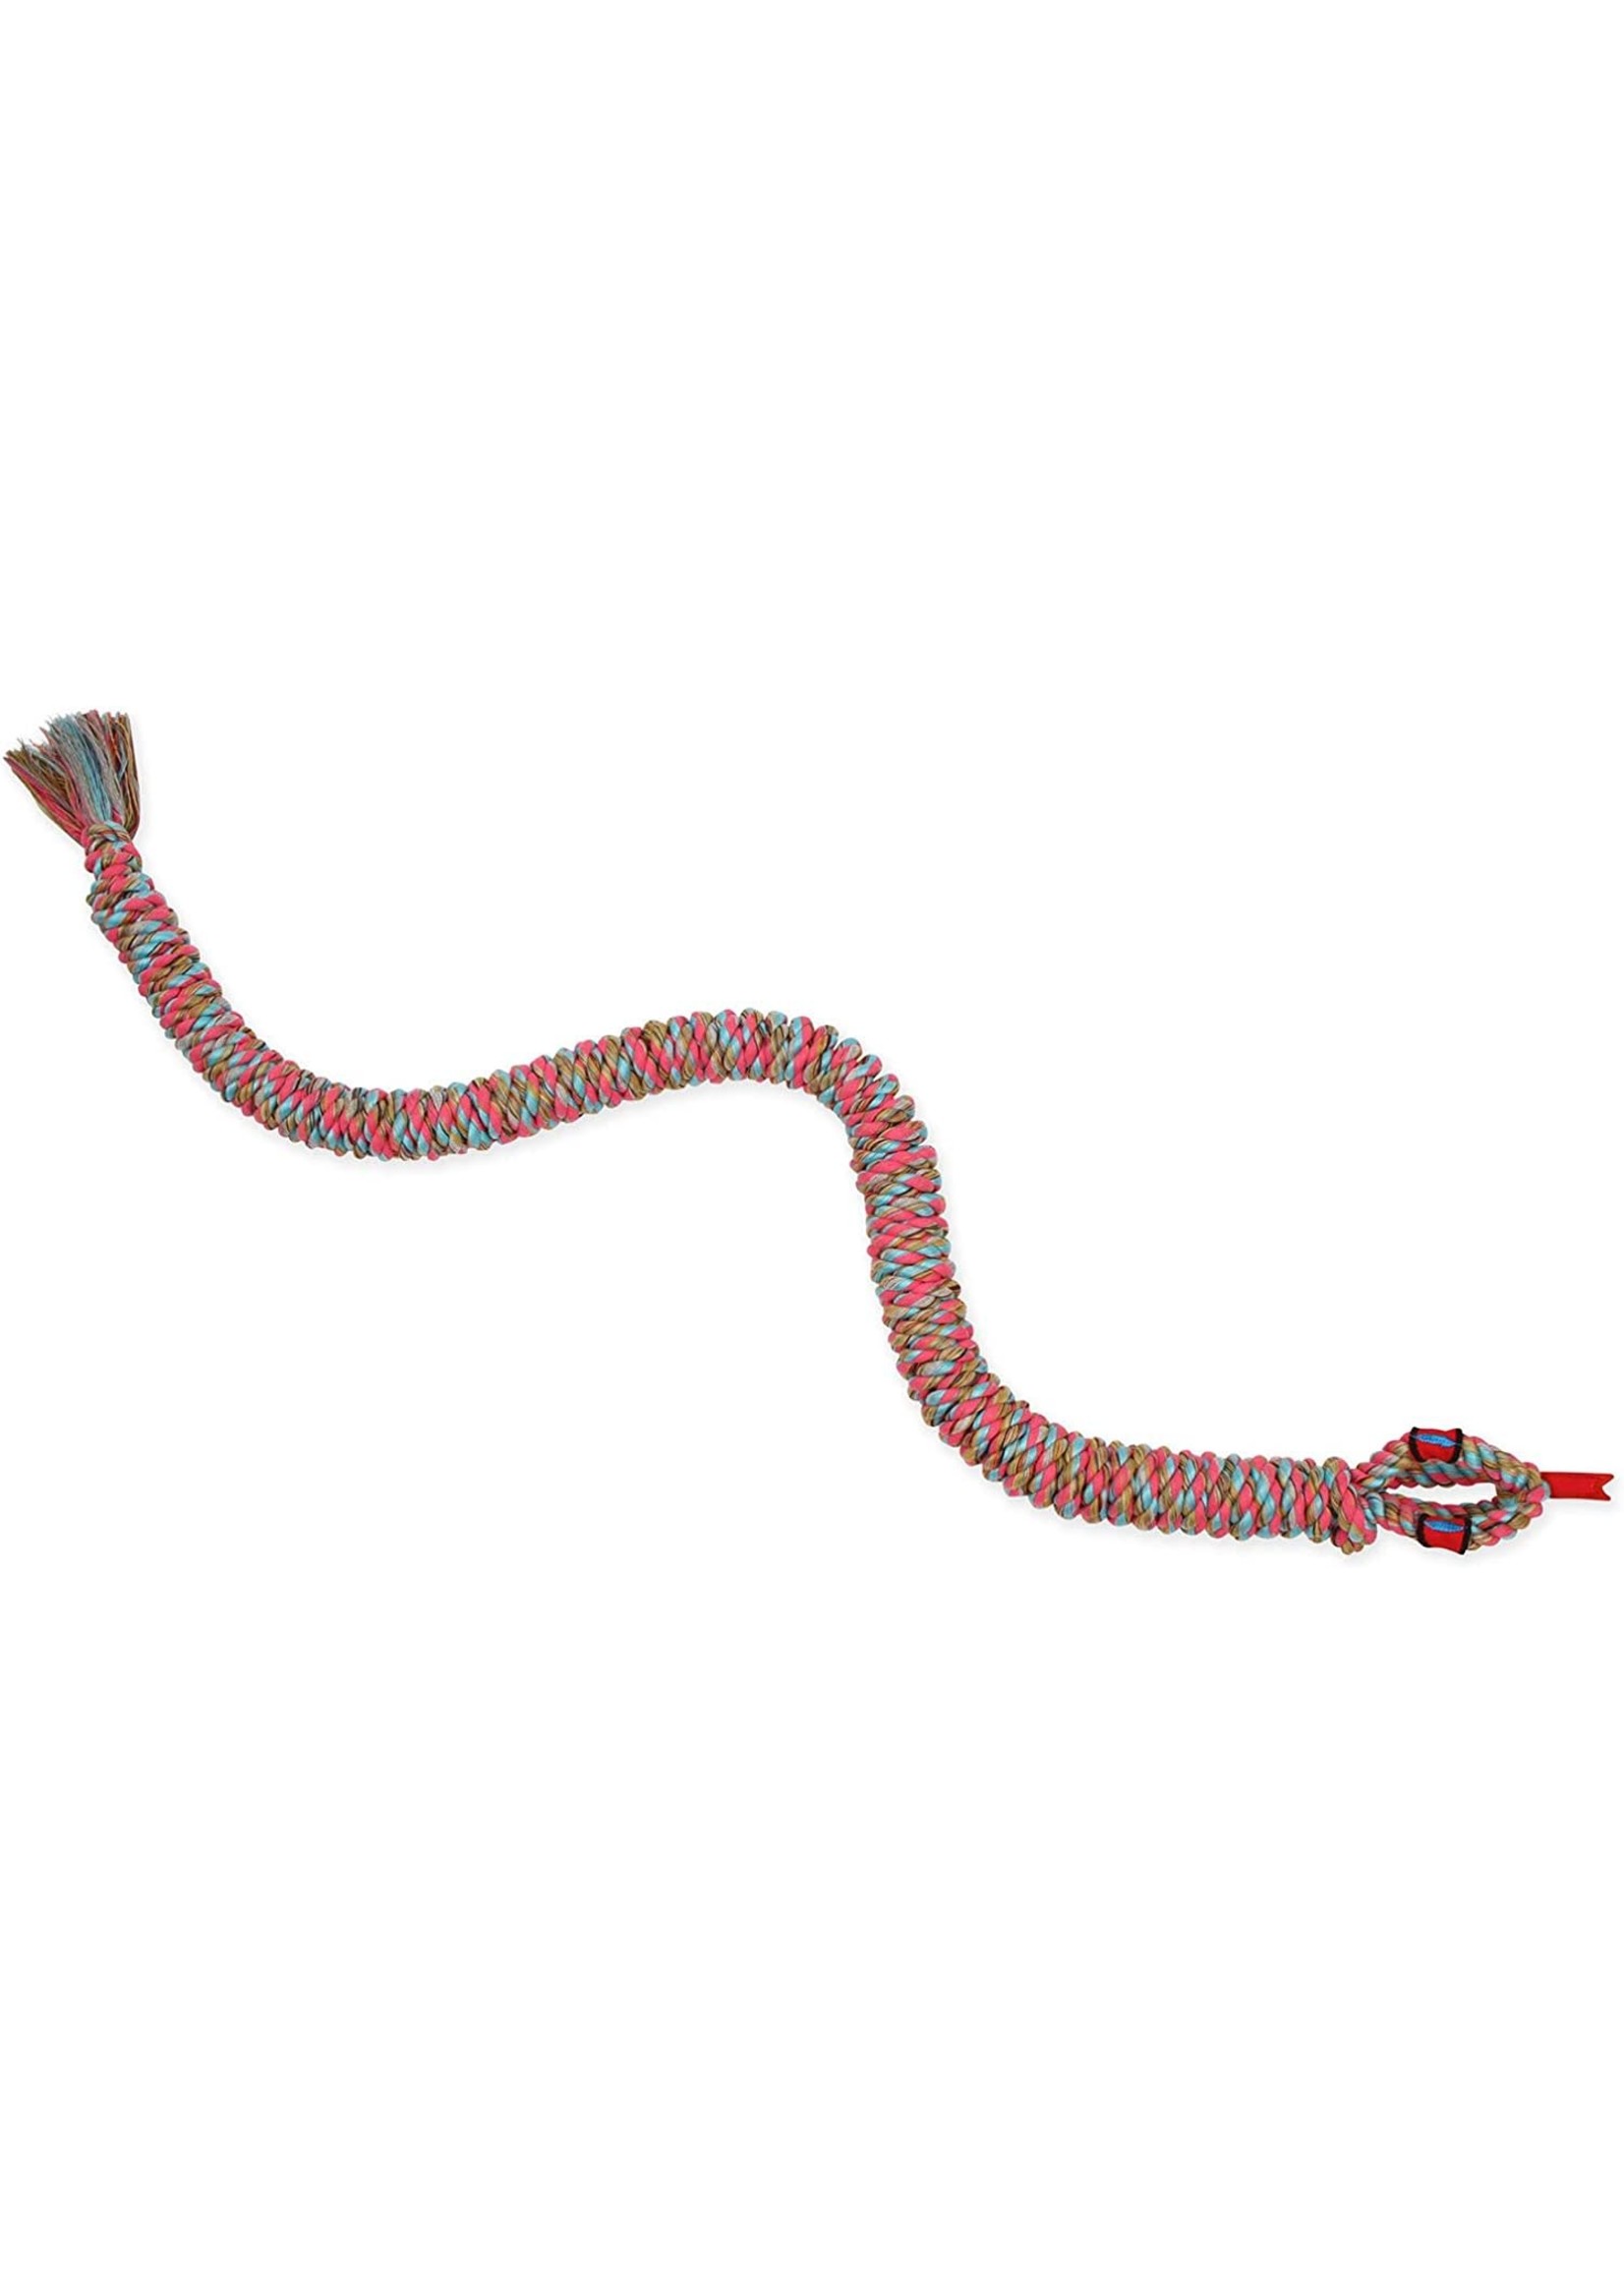 Mammoth Snake Biter Premium Large 42 inch